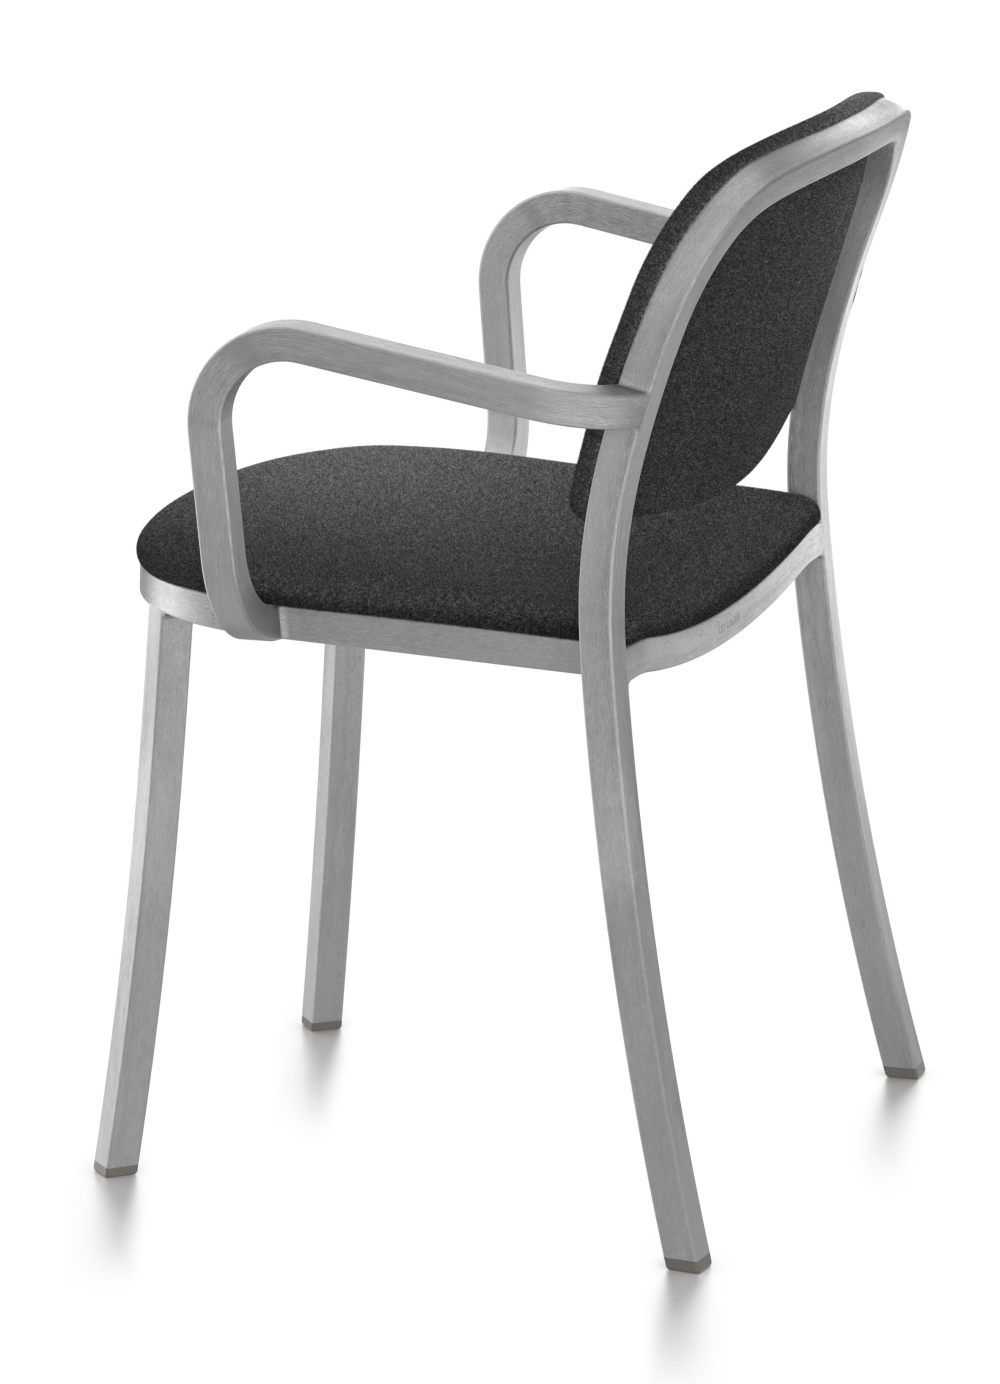 milan-jasper-morrison-emeco-design-furniture-chair-stool_rushi_hero-a.jpg